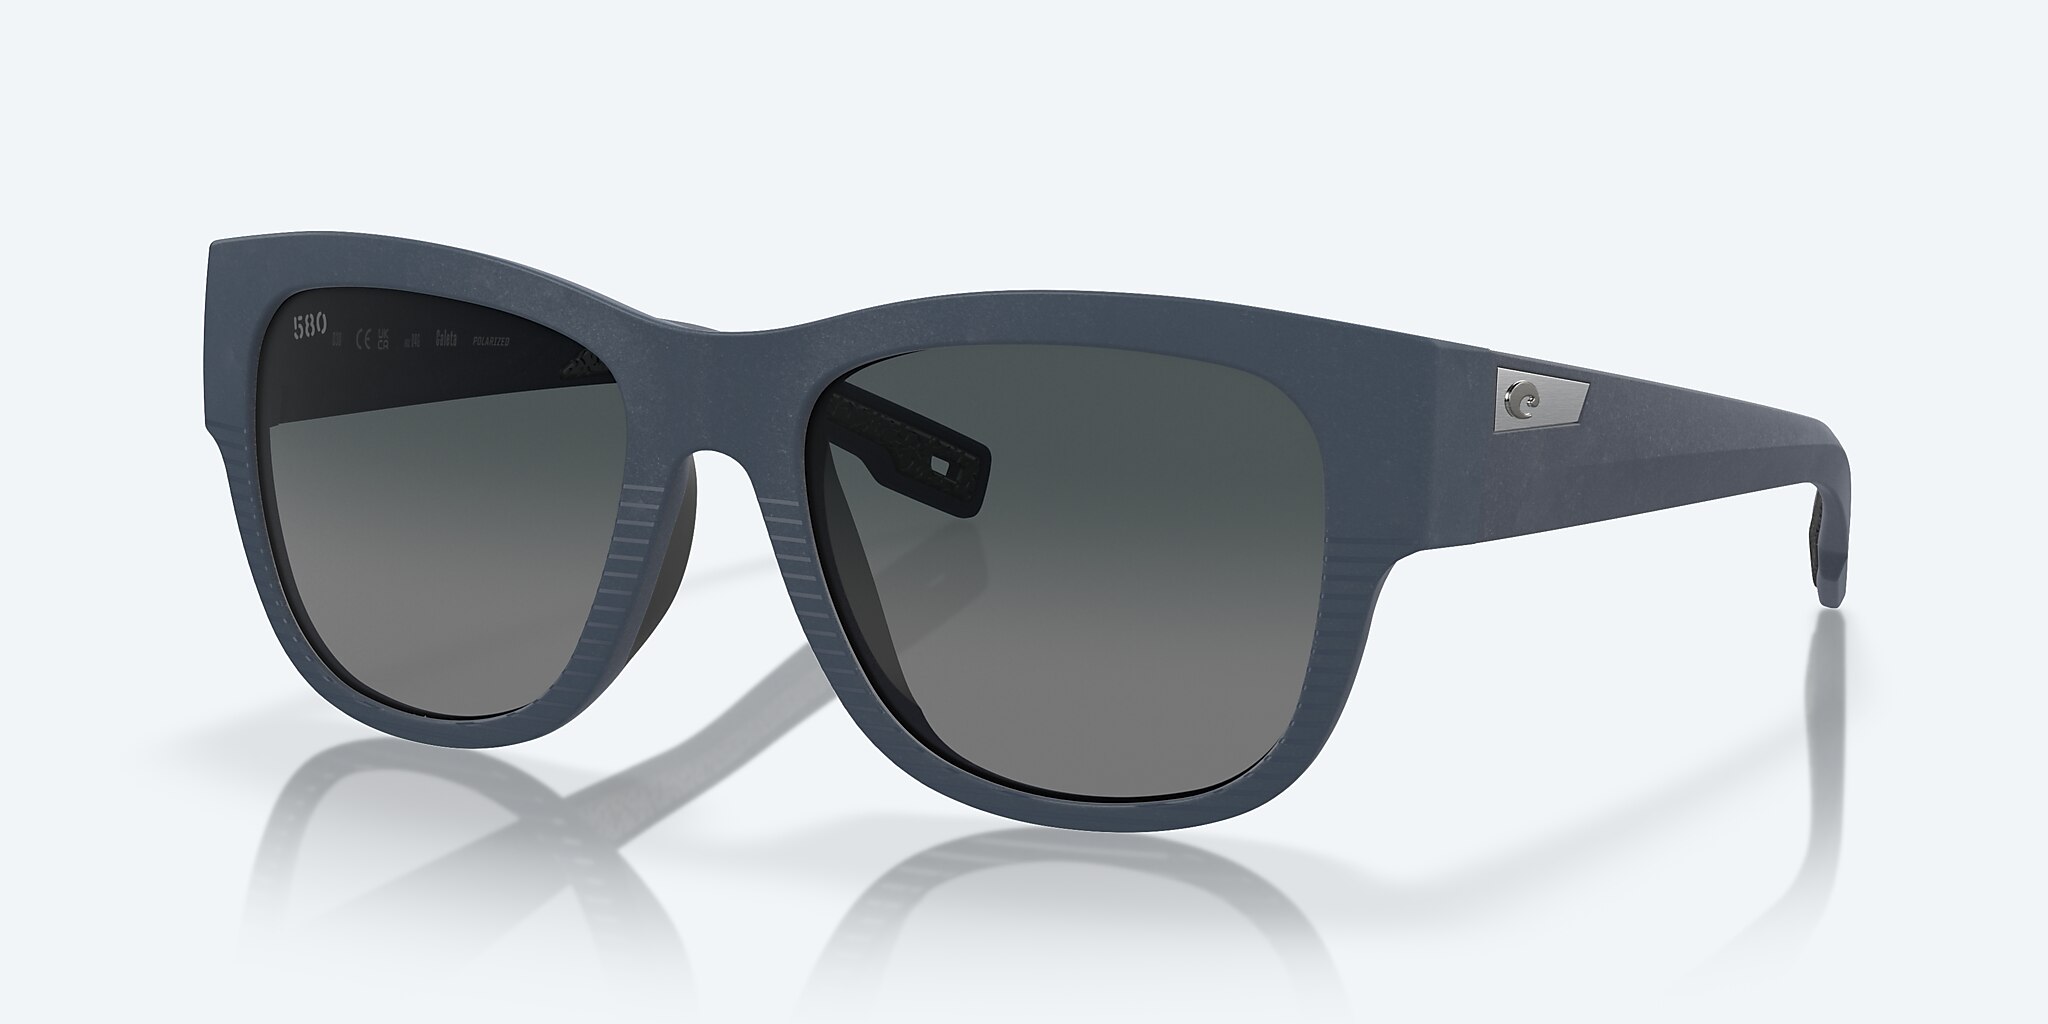 Costa Caleta Polarized Sunglasses Clear Gray Gradient 580G/CAT3